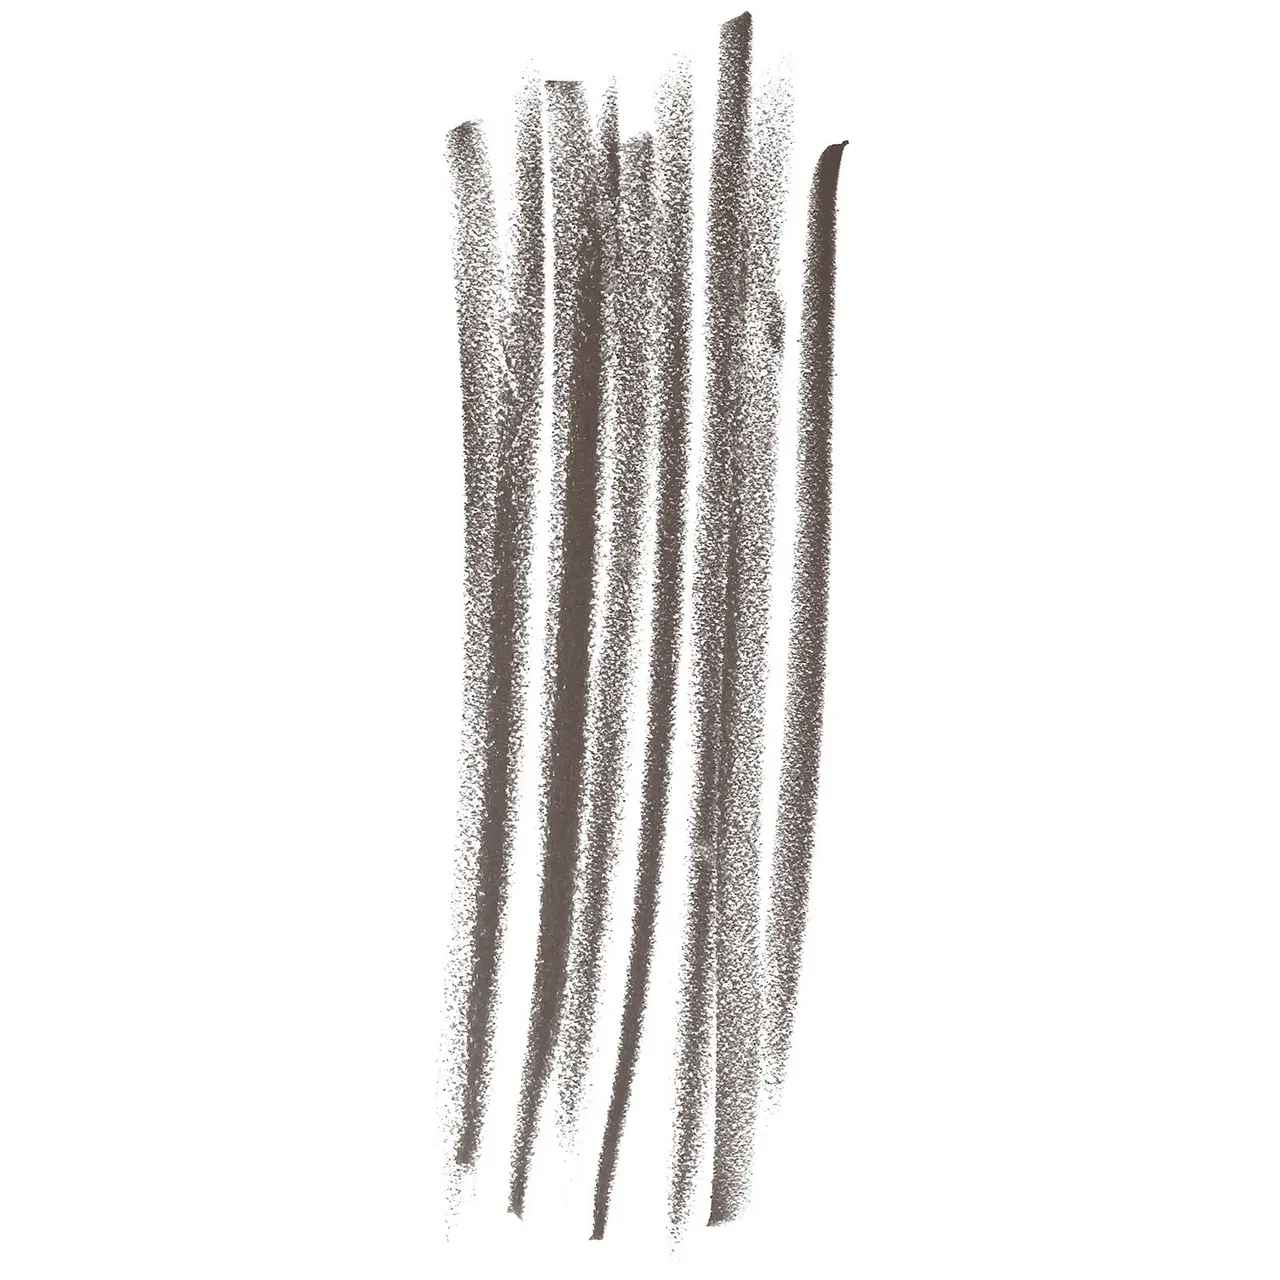 Bobbi Brown Long-Wear Brow Pencil Refill 0.33g (Various Shades) - Saddle